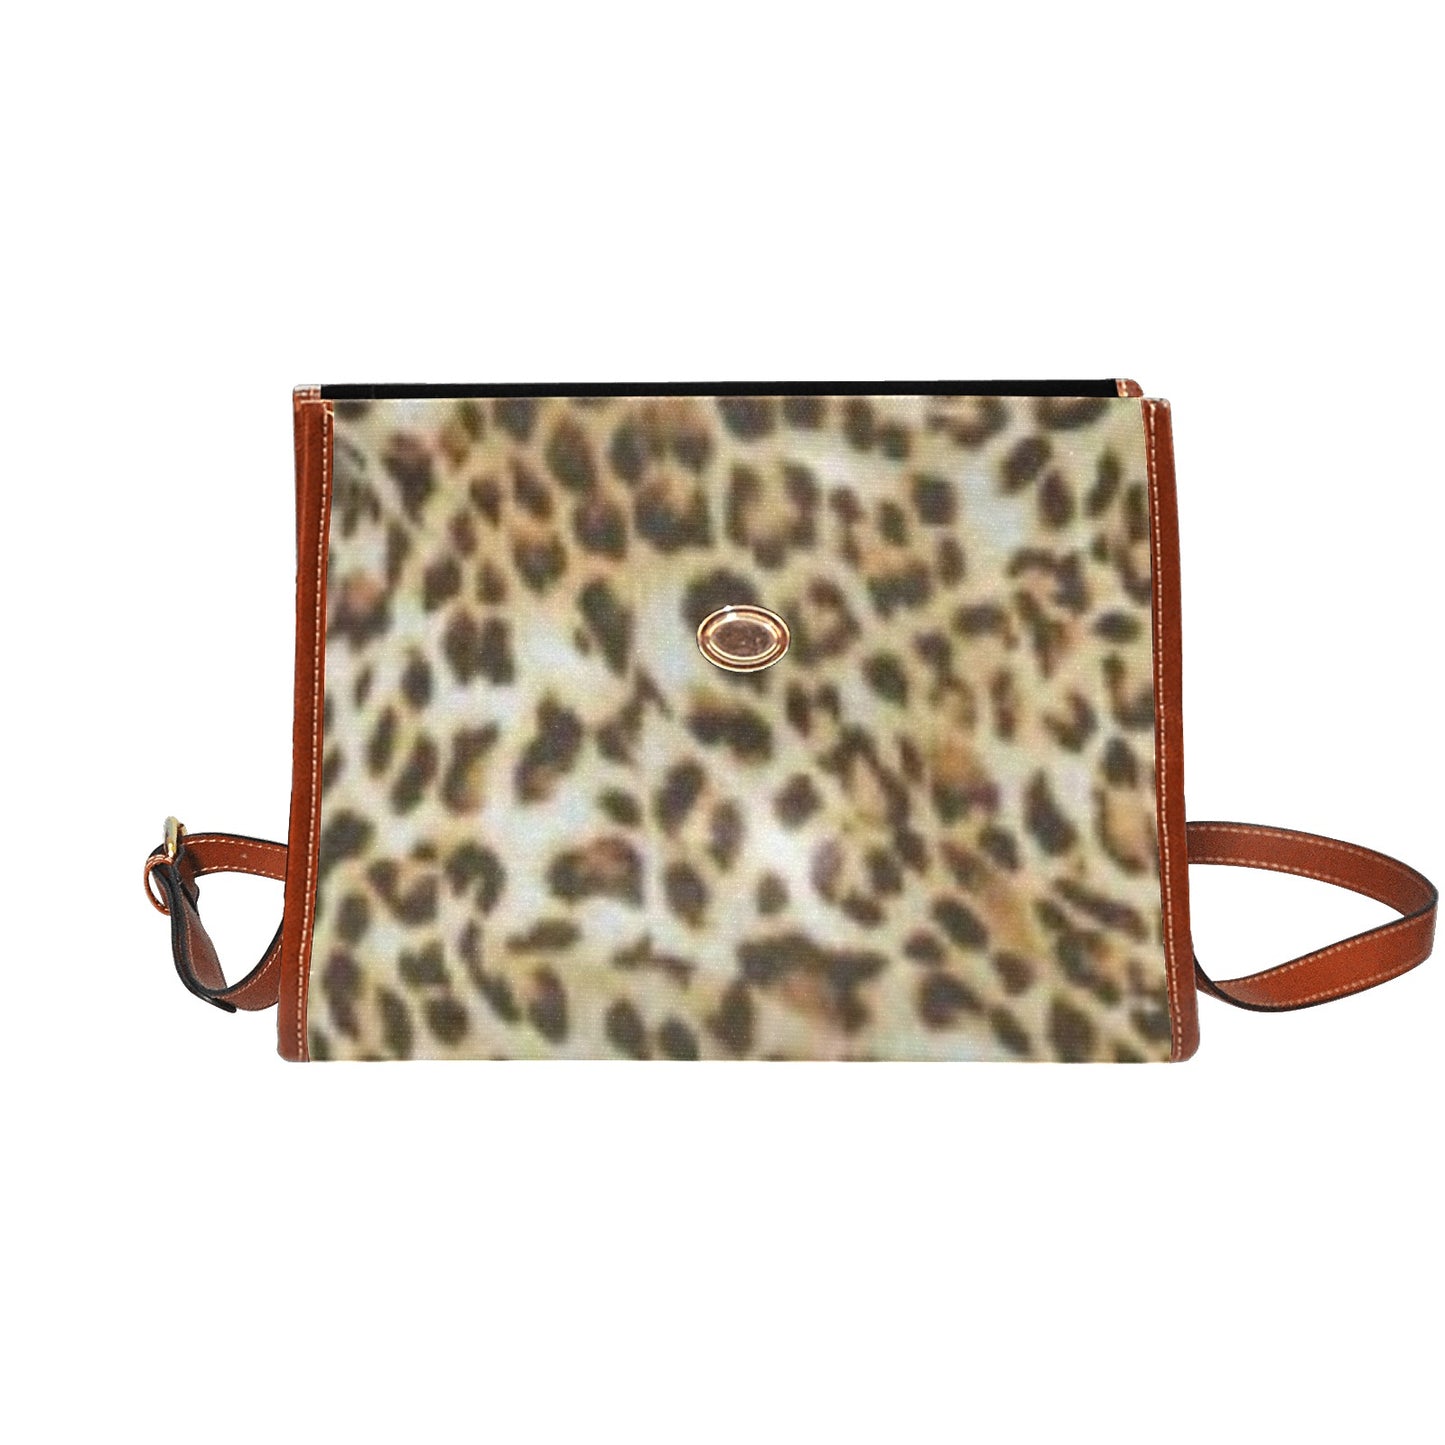 fz leopard handbag all over print waterproof canvas bag(model1641)(brown strap)